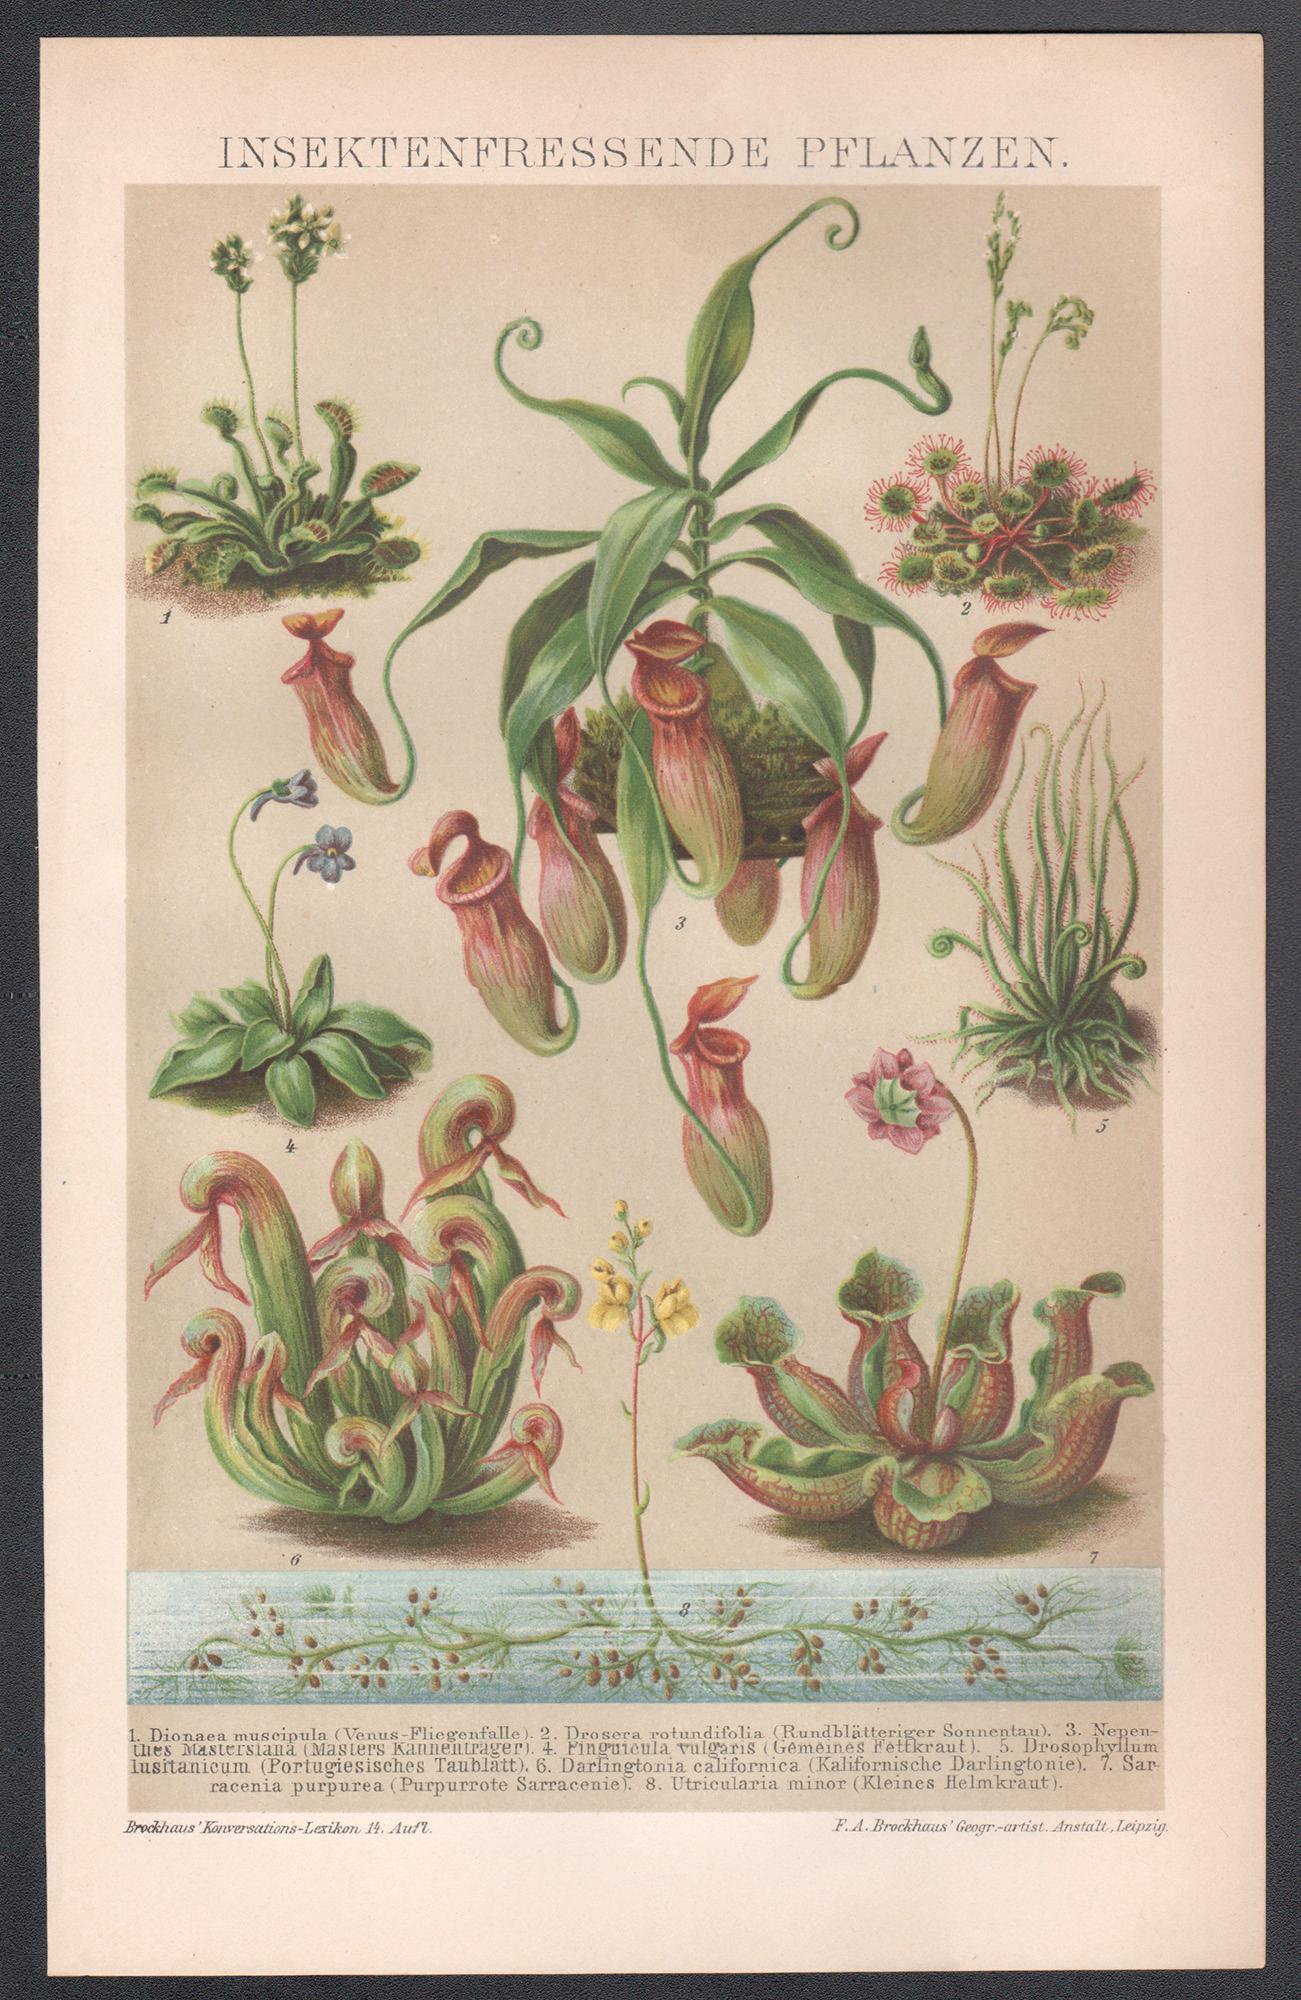 Insektenfressende Pflanzen (Carnivorous Plants), German antique botanical print - Print by Unknown